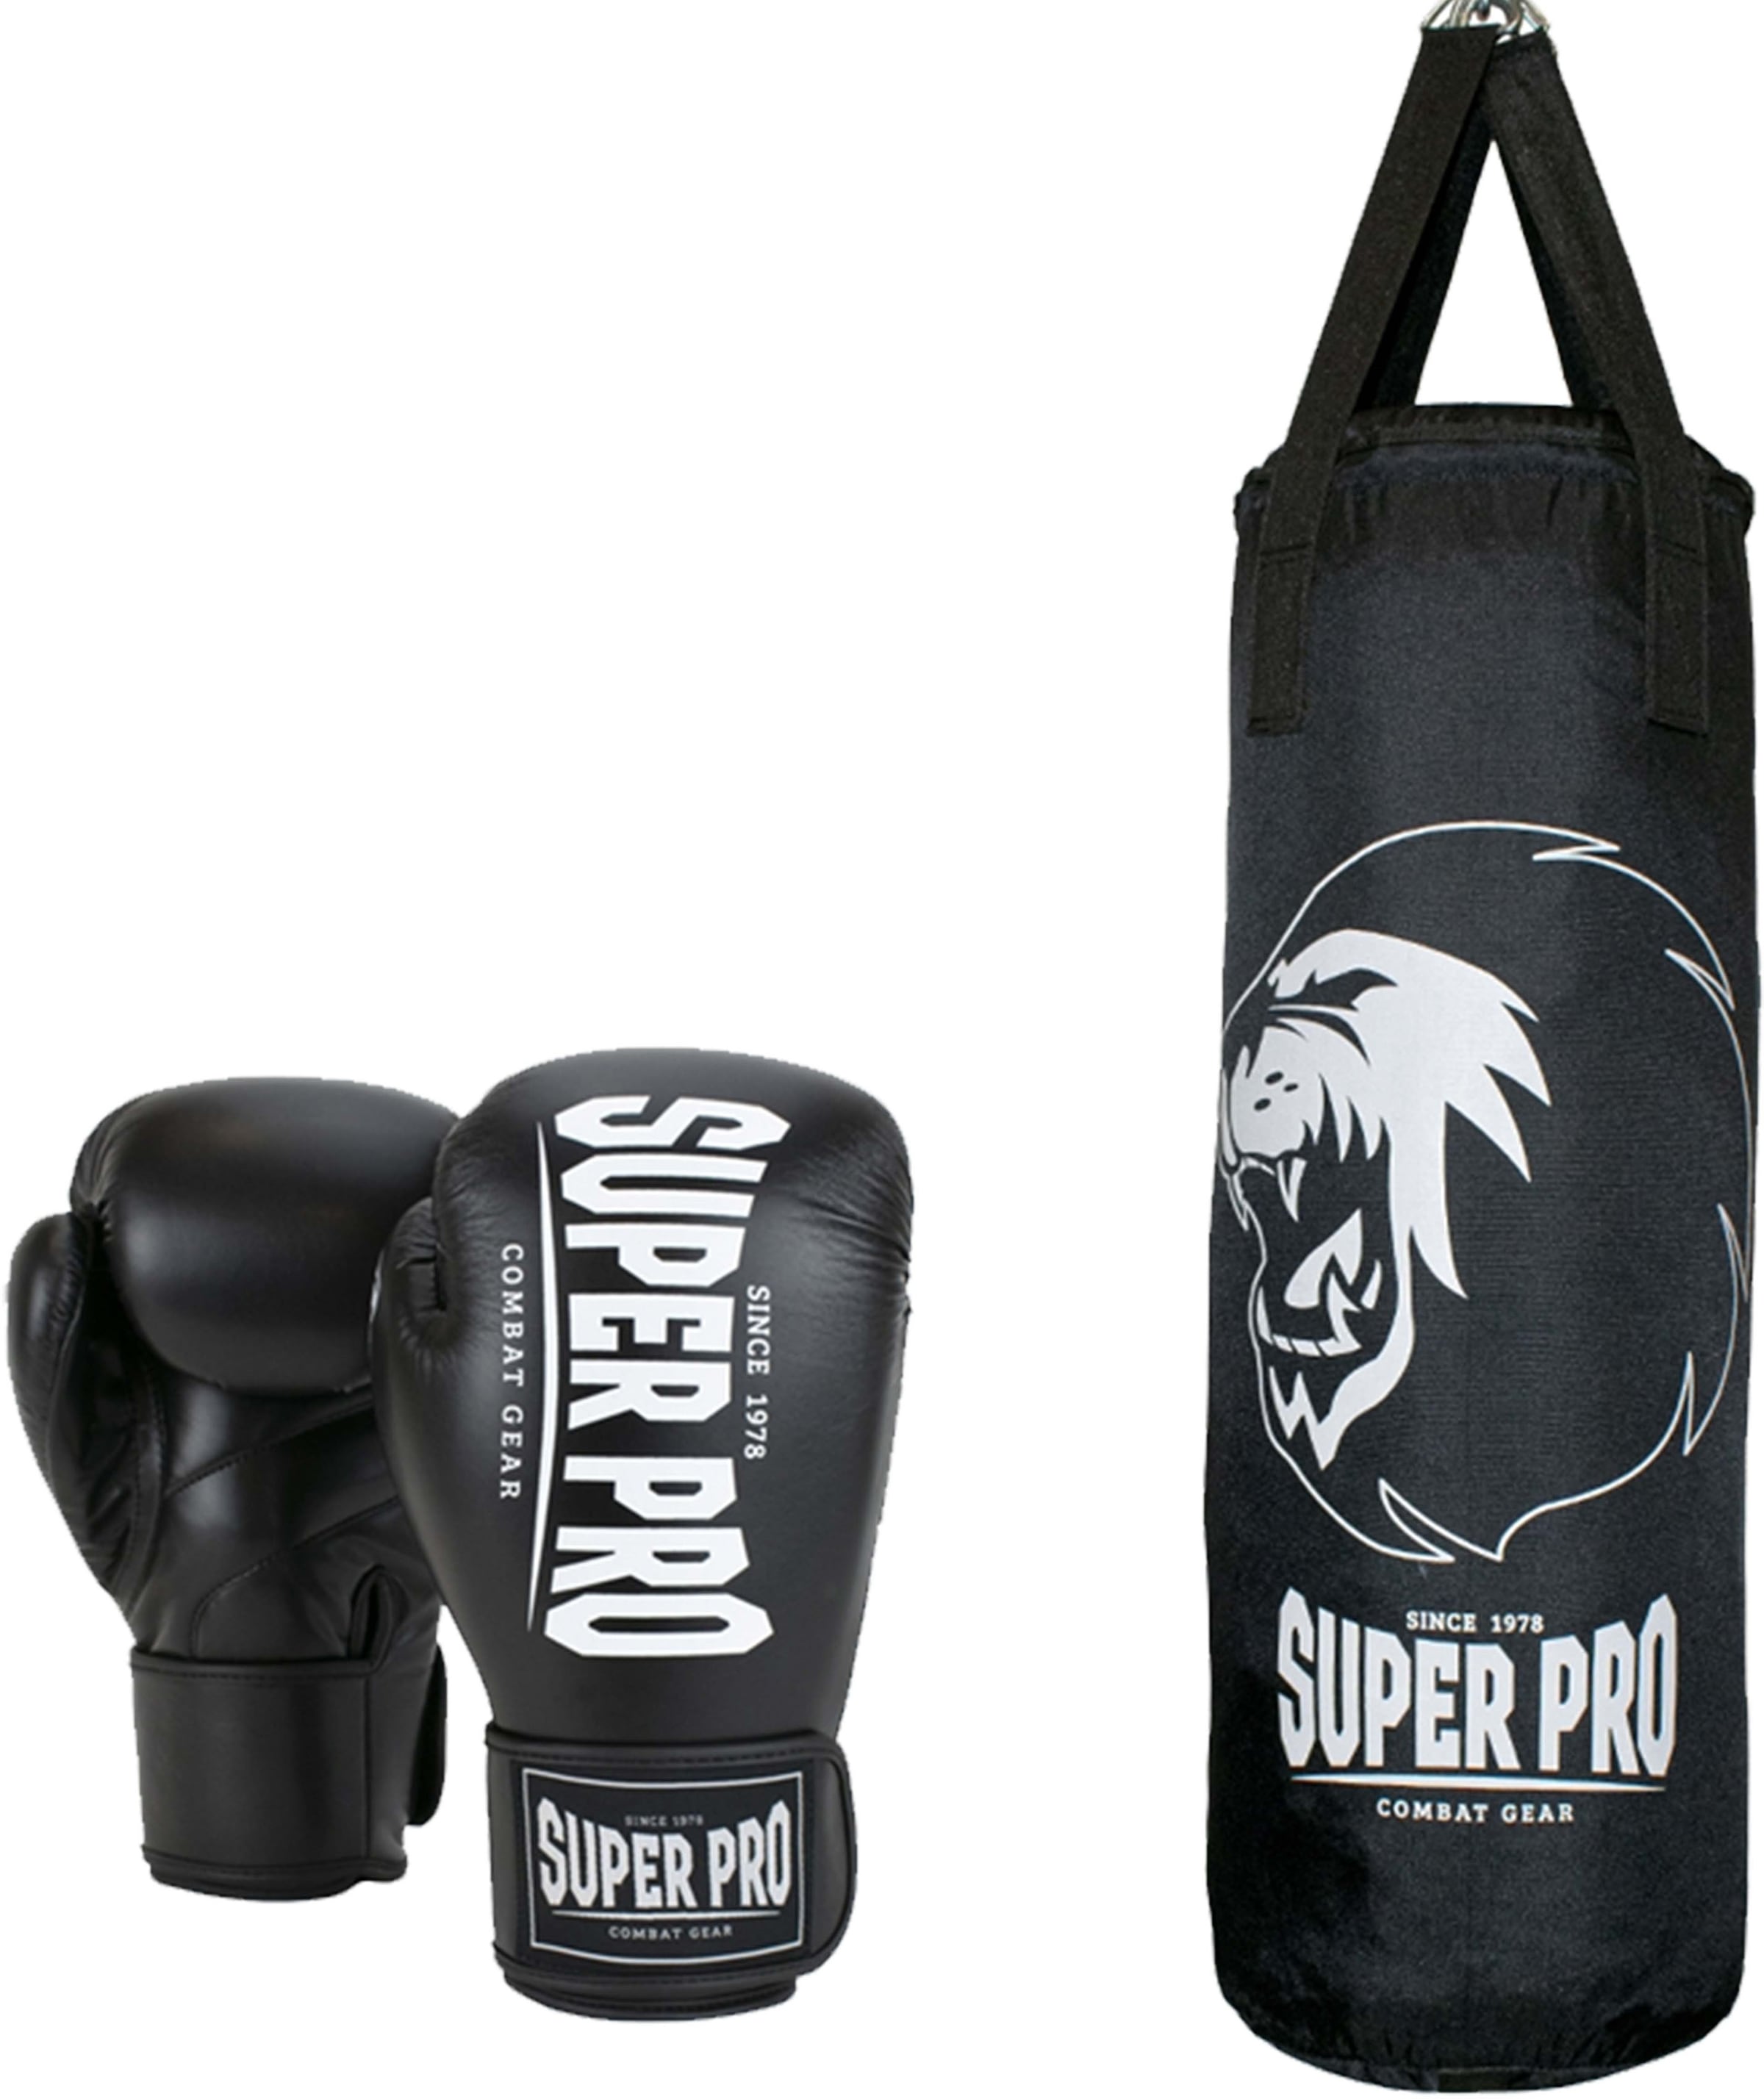 Entdecke Super Pro Boxsack »Boxing Set Punch«, (Set, mit Boxhandschuhen)  auf | Boxsäcke